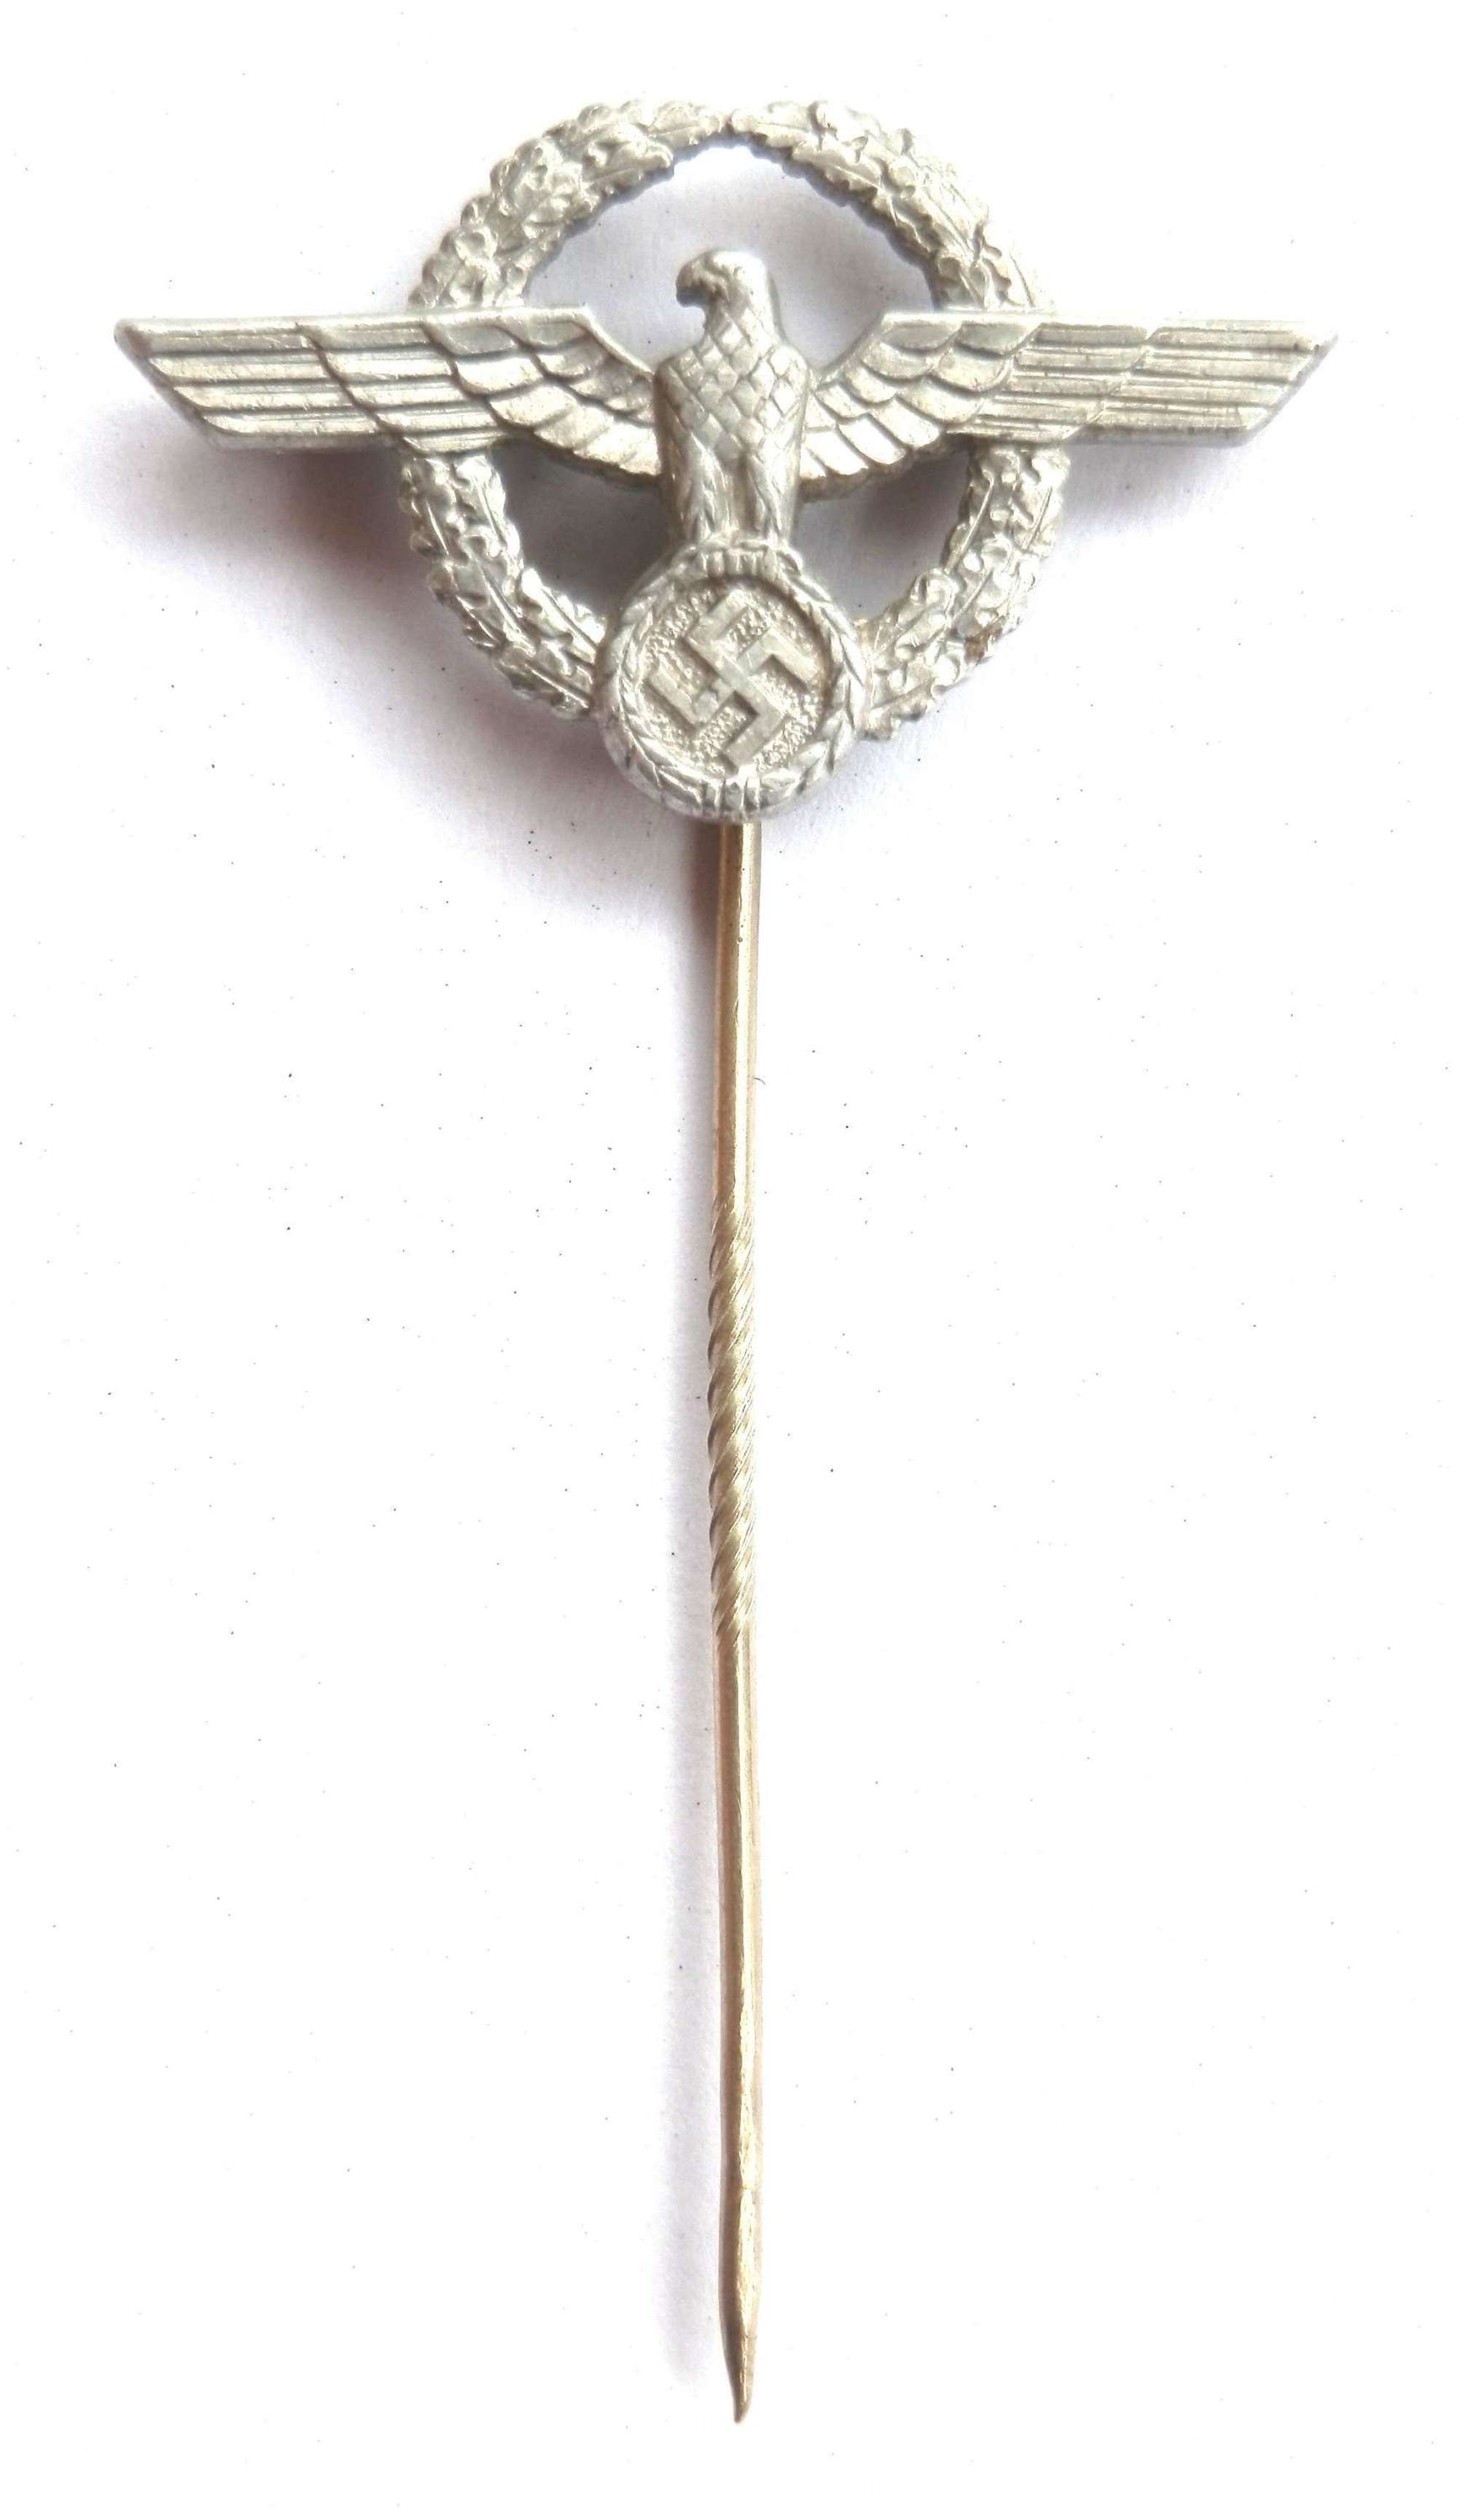 German Reichs Police Stick Pin.